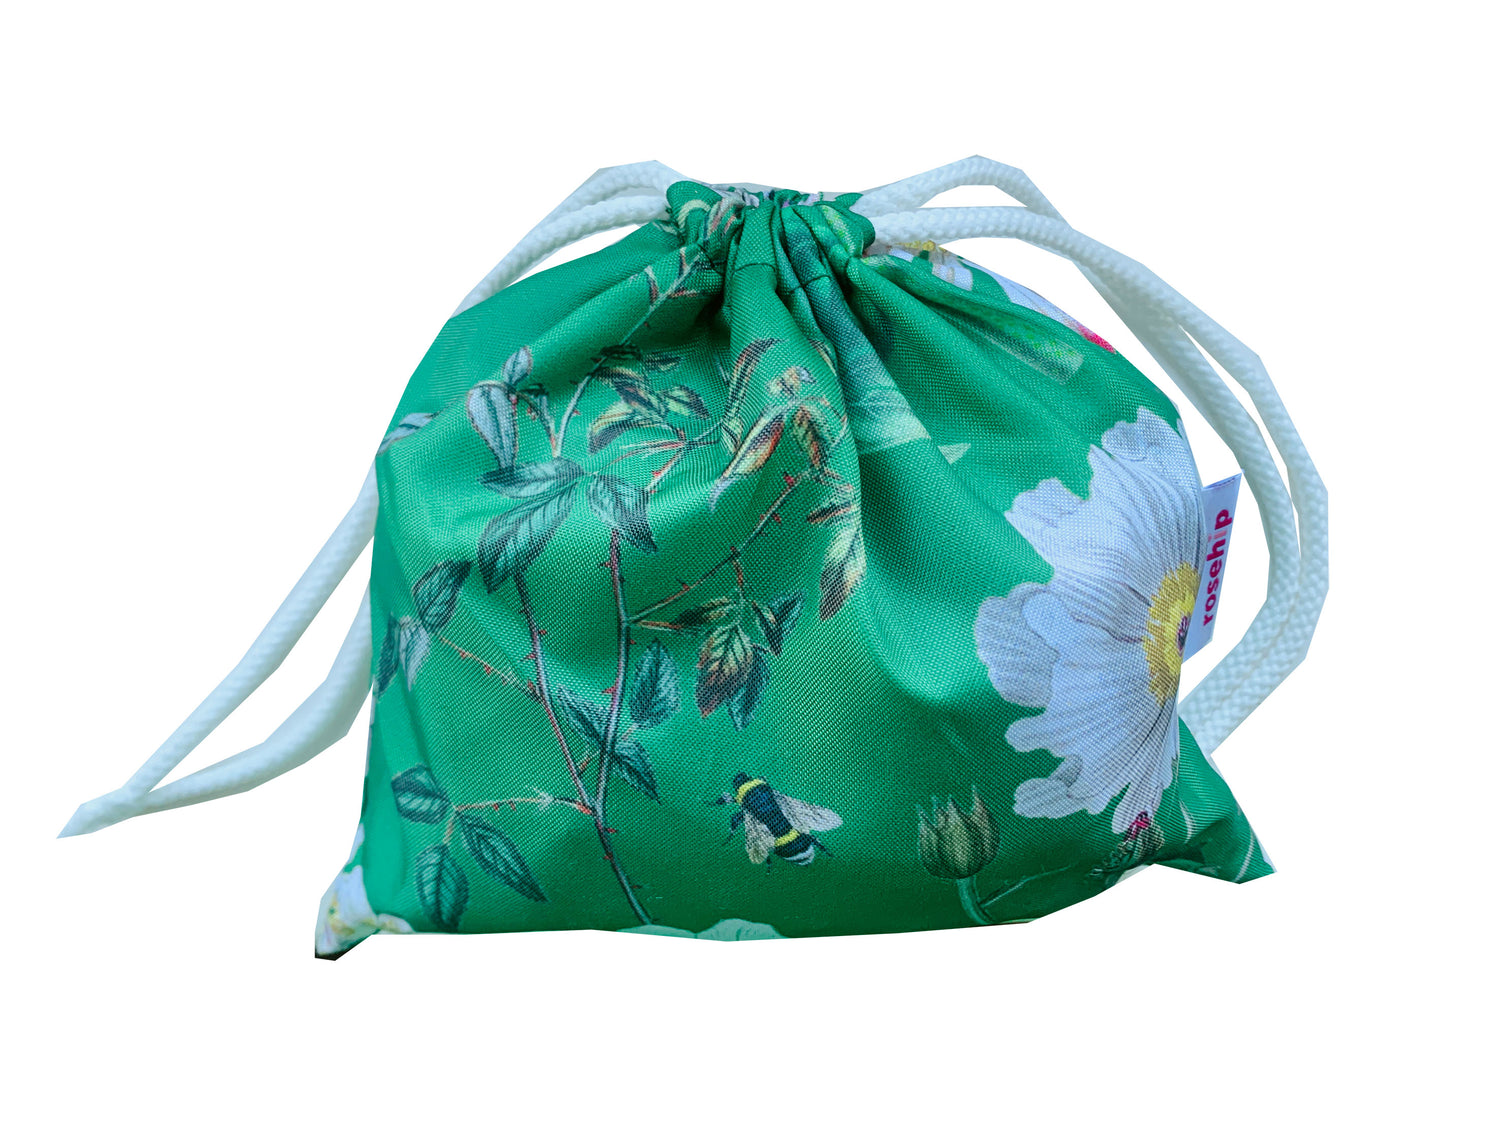 Poncho (waterproof, inc bag) - Heavenly Green